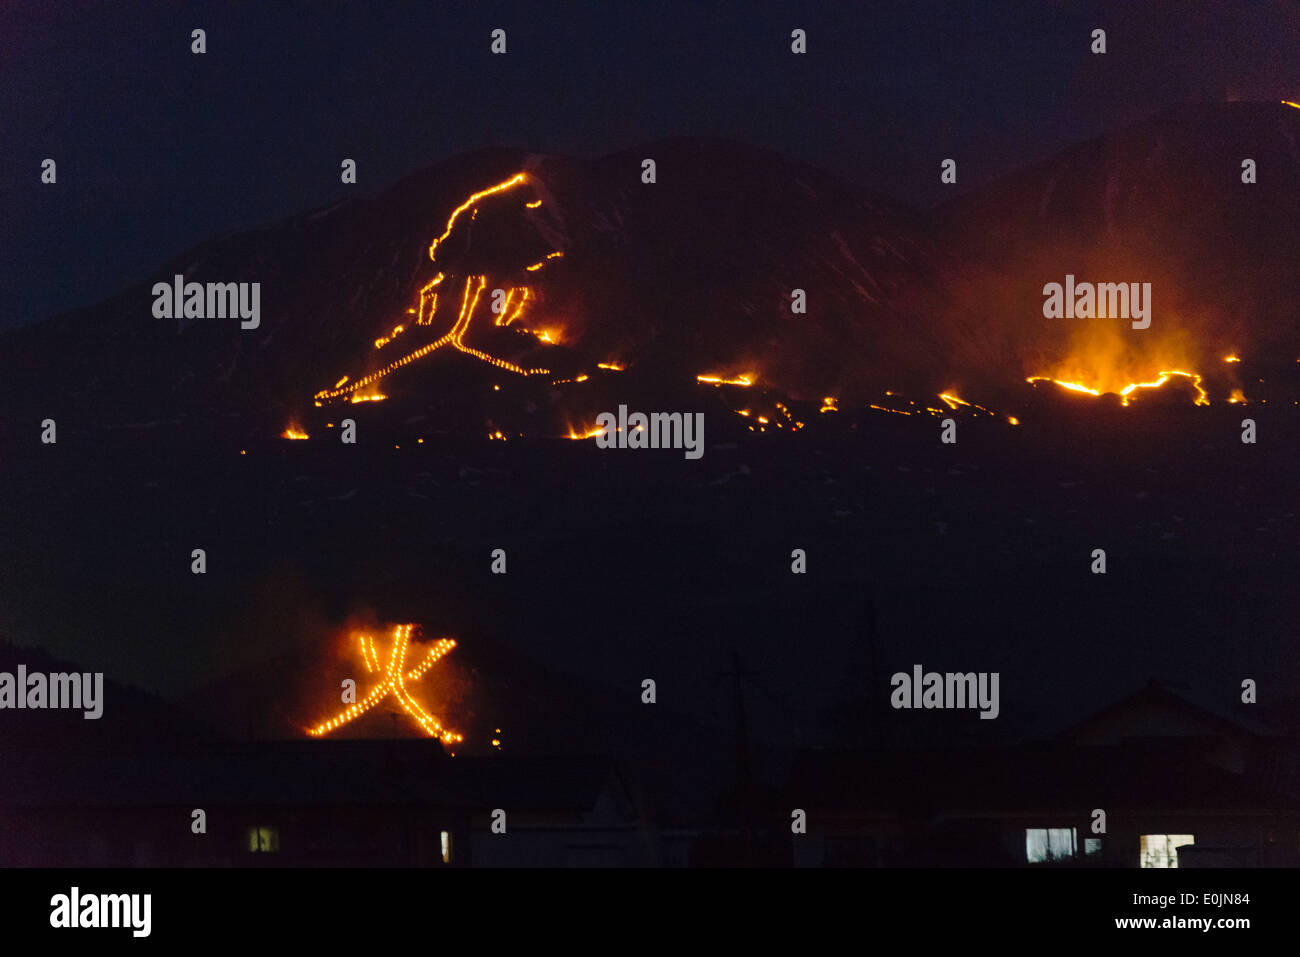 Feuer, bilden zwei riesige chinesische Schriftzeichen bedeutet "Feuer" am Berghang während Fire Festival, Aso, Kumamoto, Kyushu, Japan Stockfoto